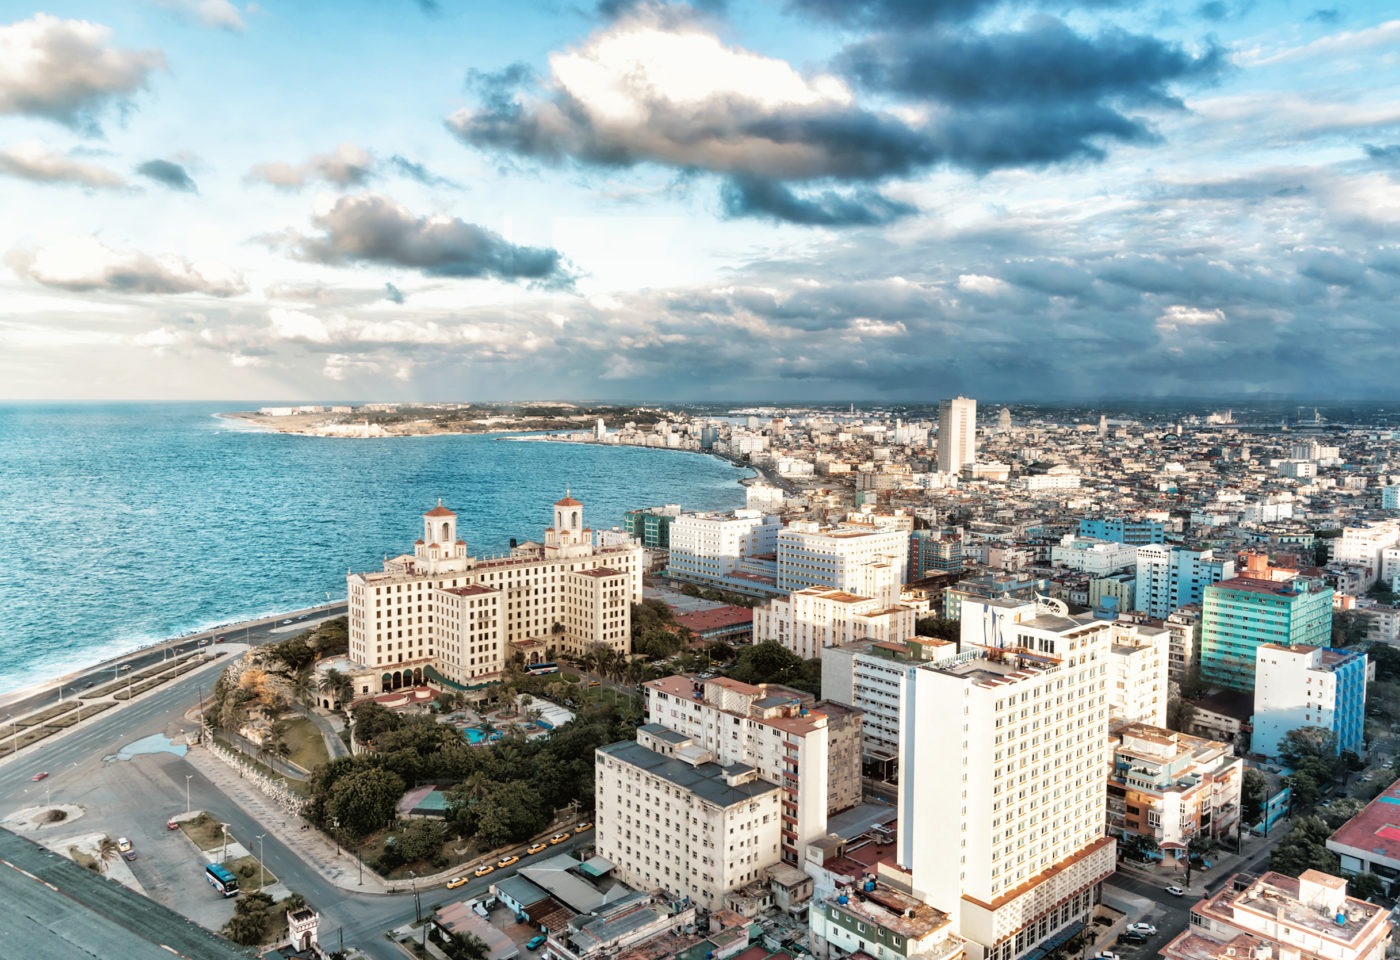 Aerial view of Malecon, Havana, Cuba